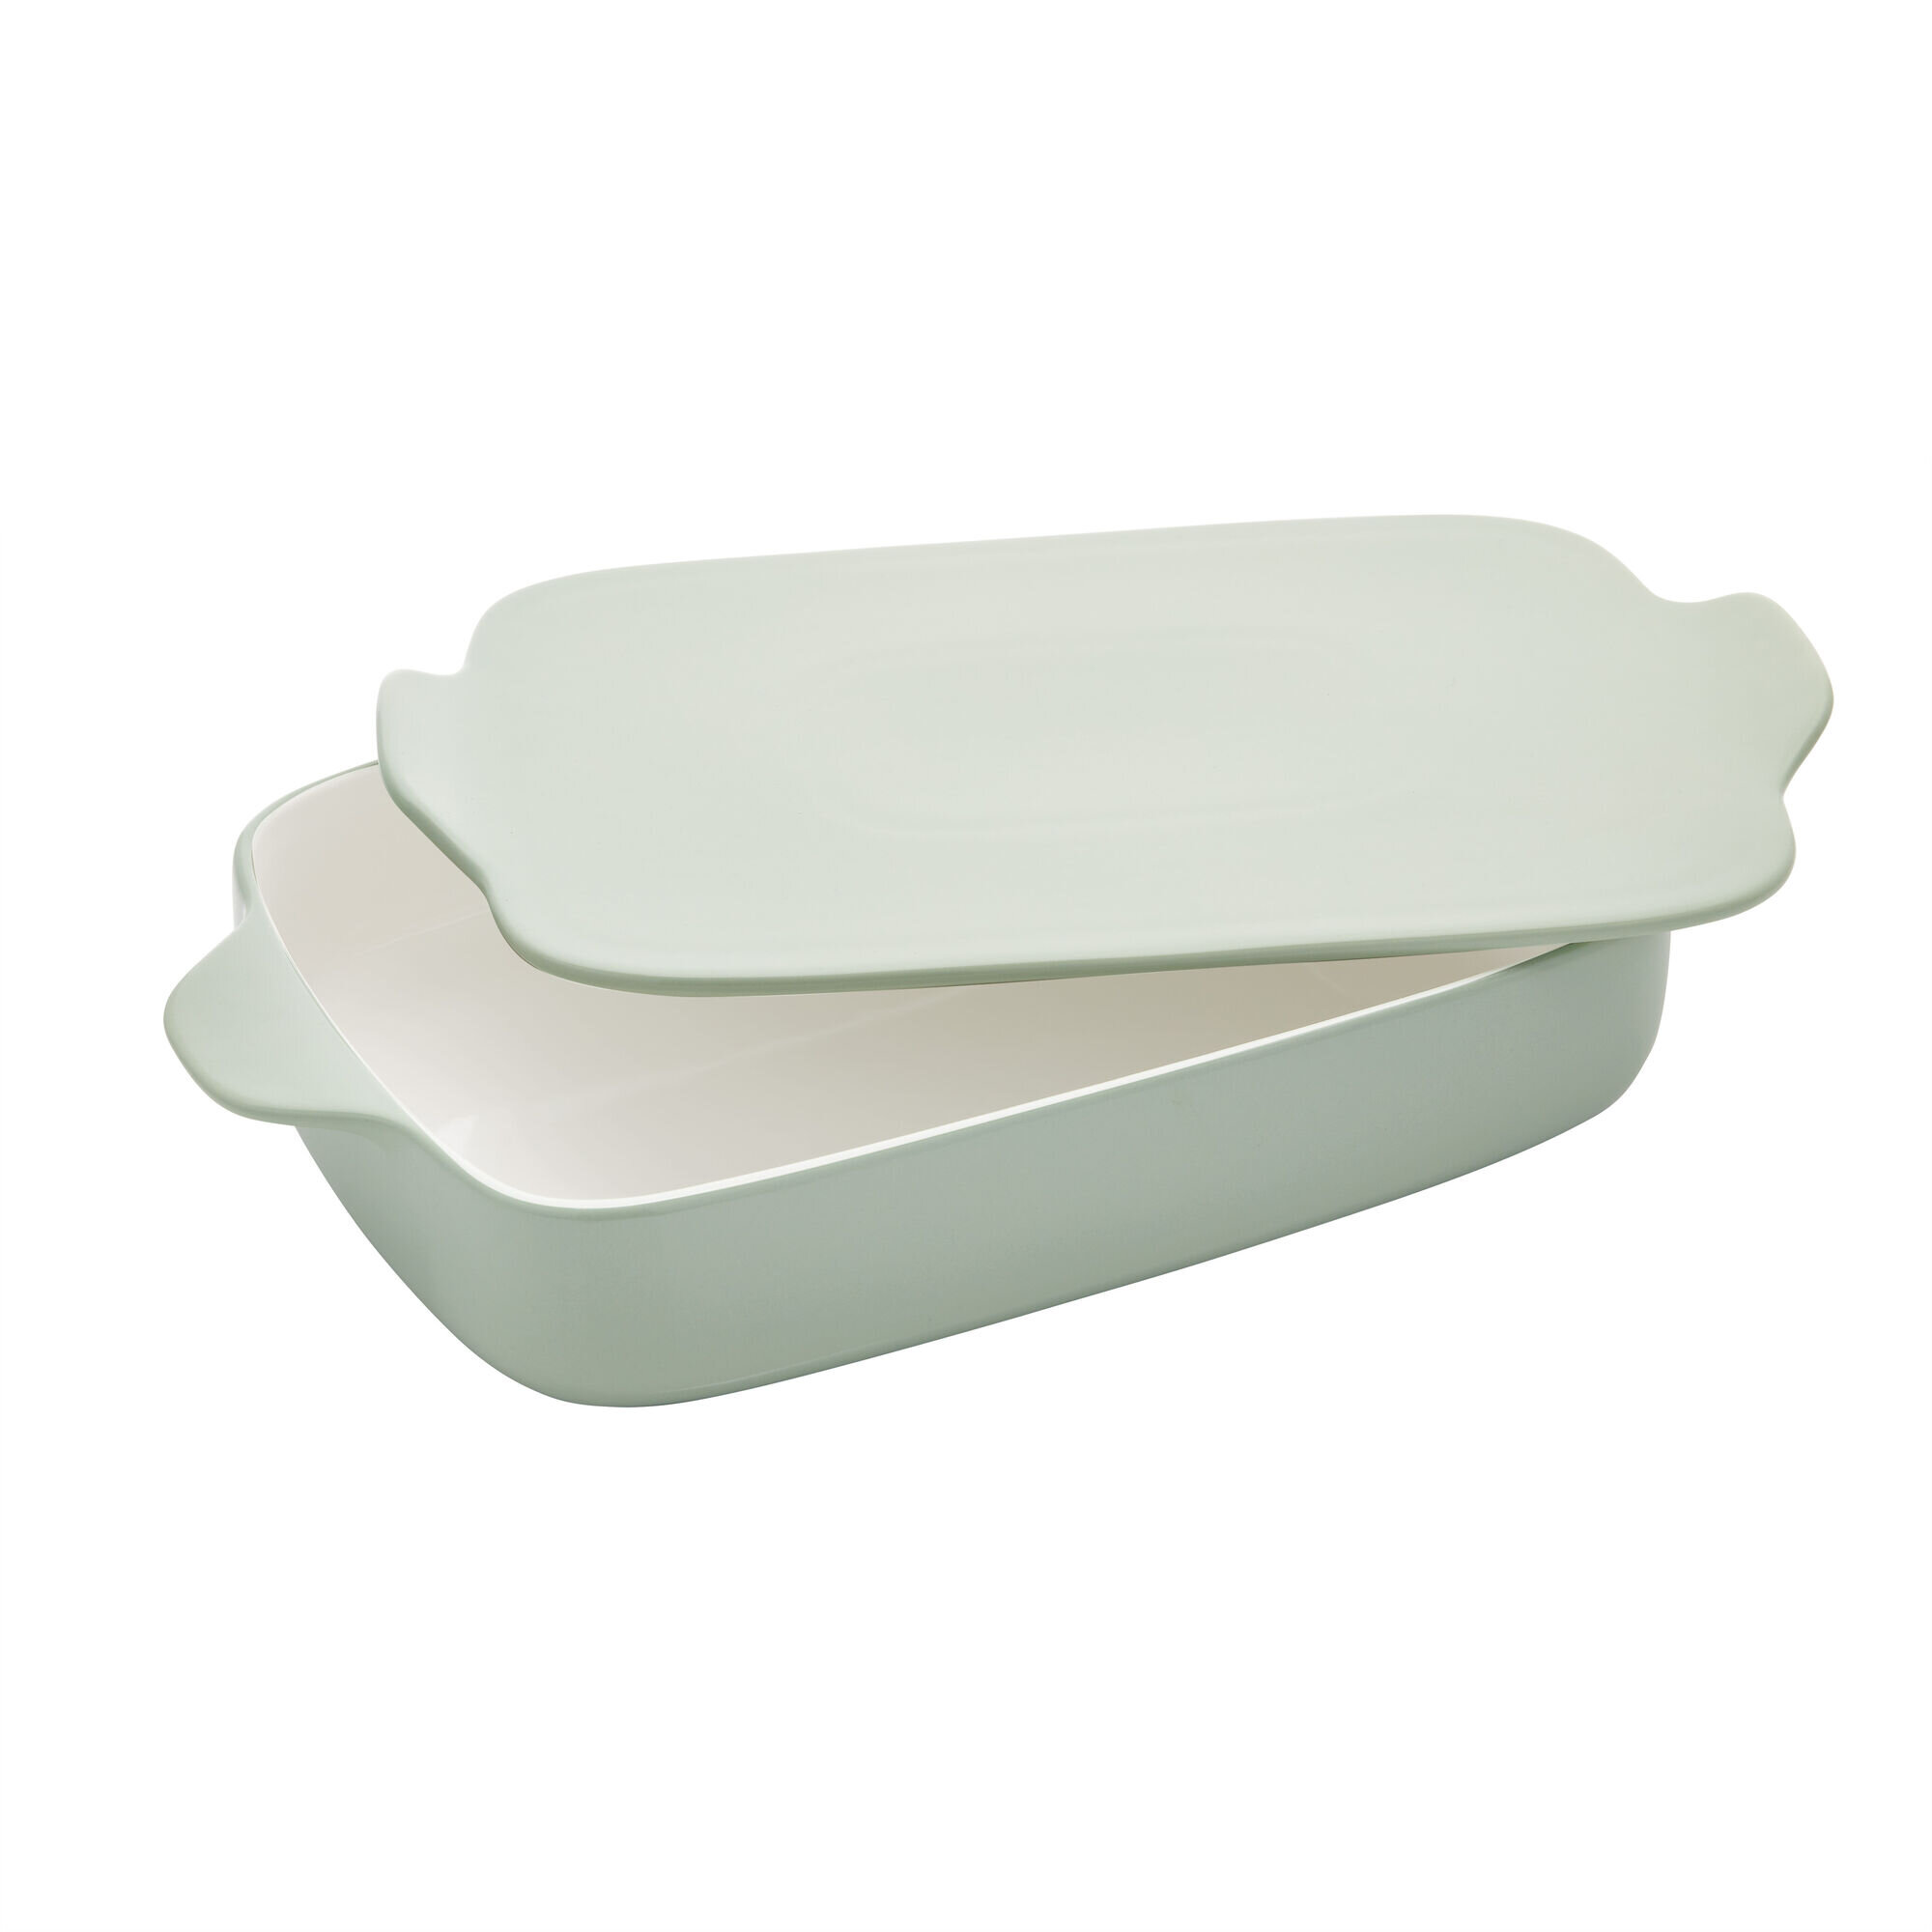 9 x 13 Rectangular Glass Baking Dish With Sage Green Lid, 5-Quart  Capacity